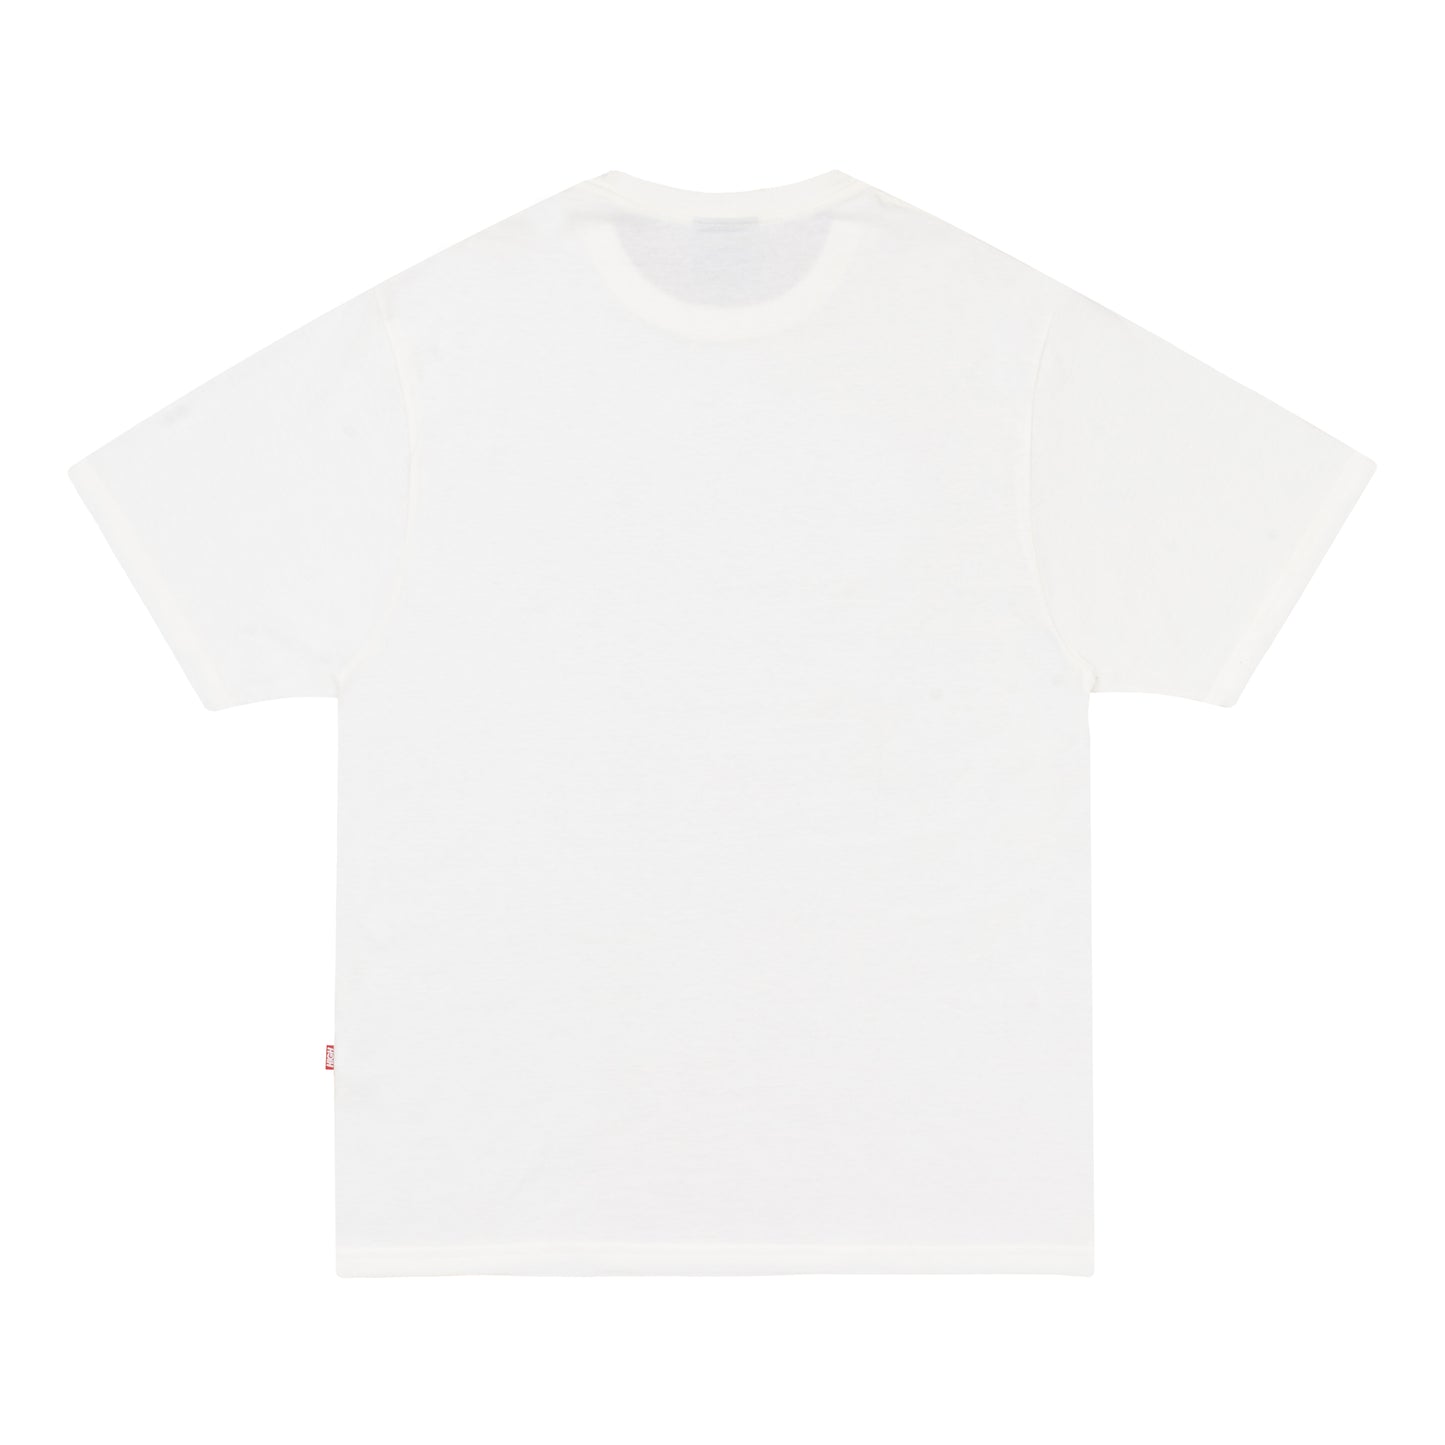 HIGH - Camiseta Emule "White" - THE GAME